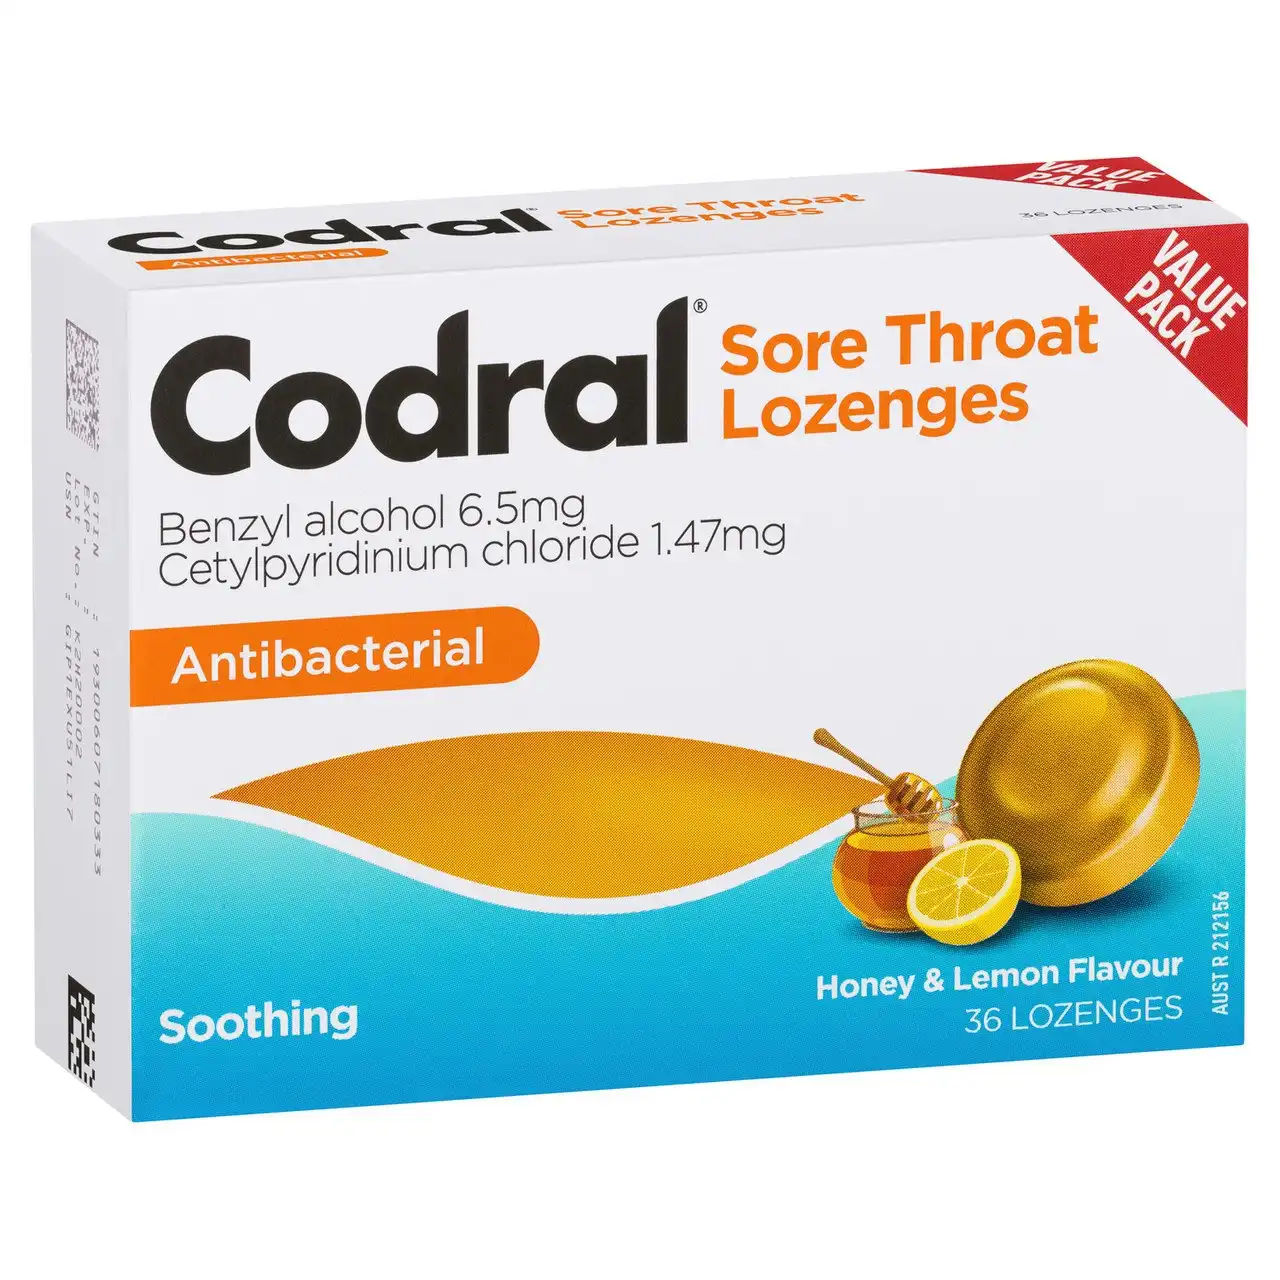 CODRAL Sore Throat Relief Lozenges Antibacterial Honey & Lemon 36 Pack